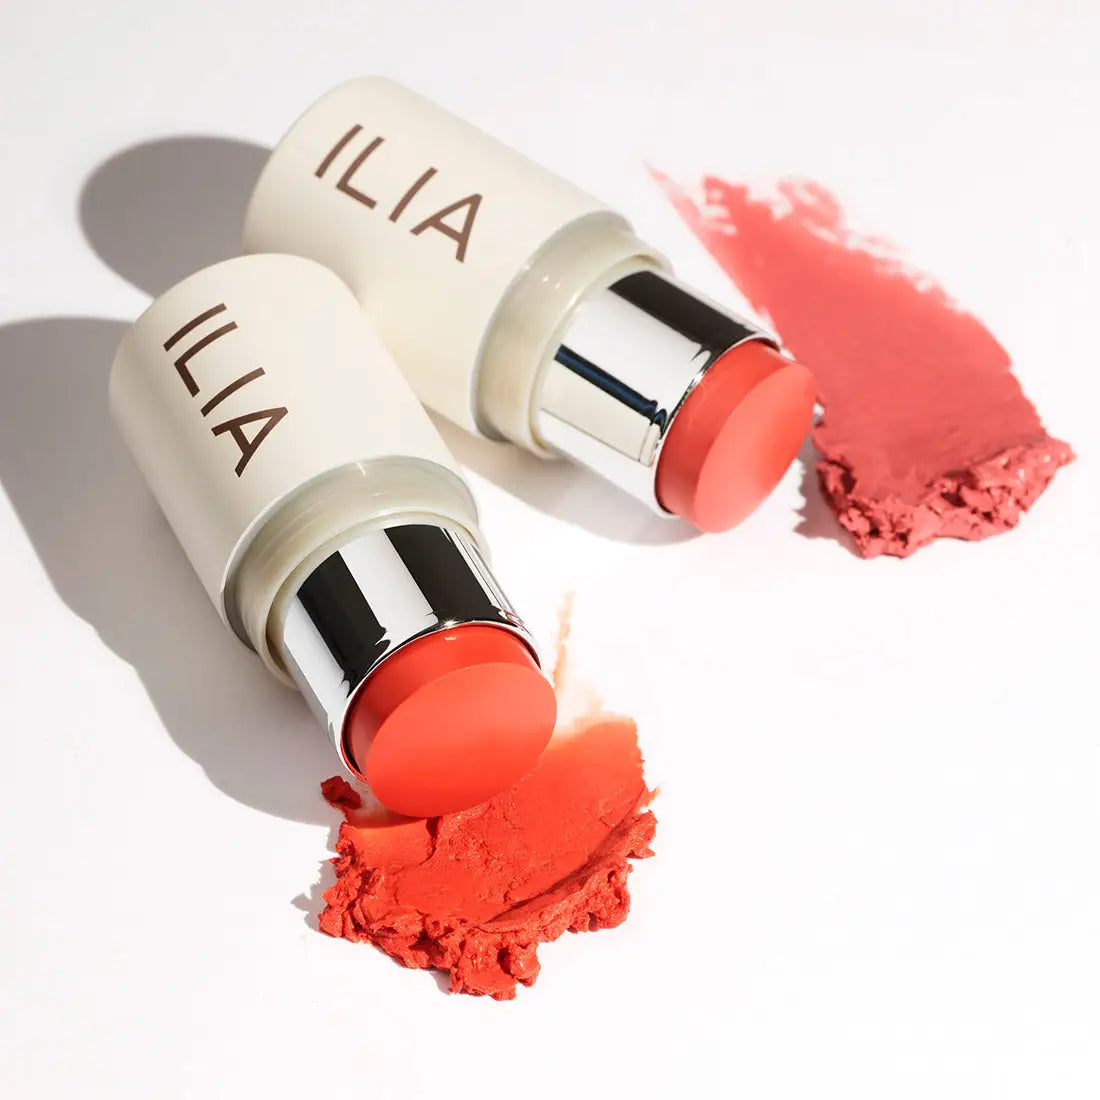 Ilia Beauty Multi Stick 5g - A Fine Romance